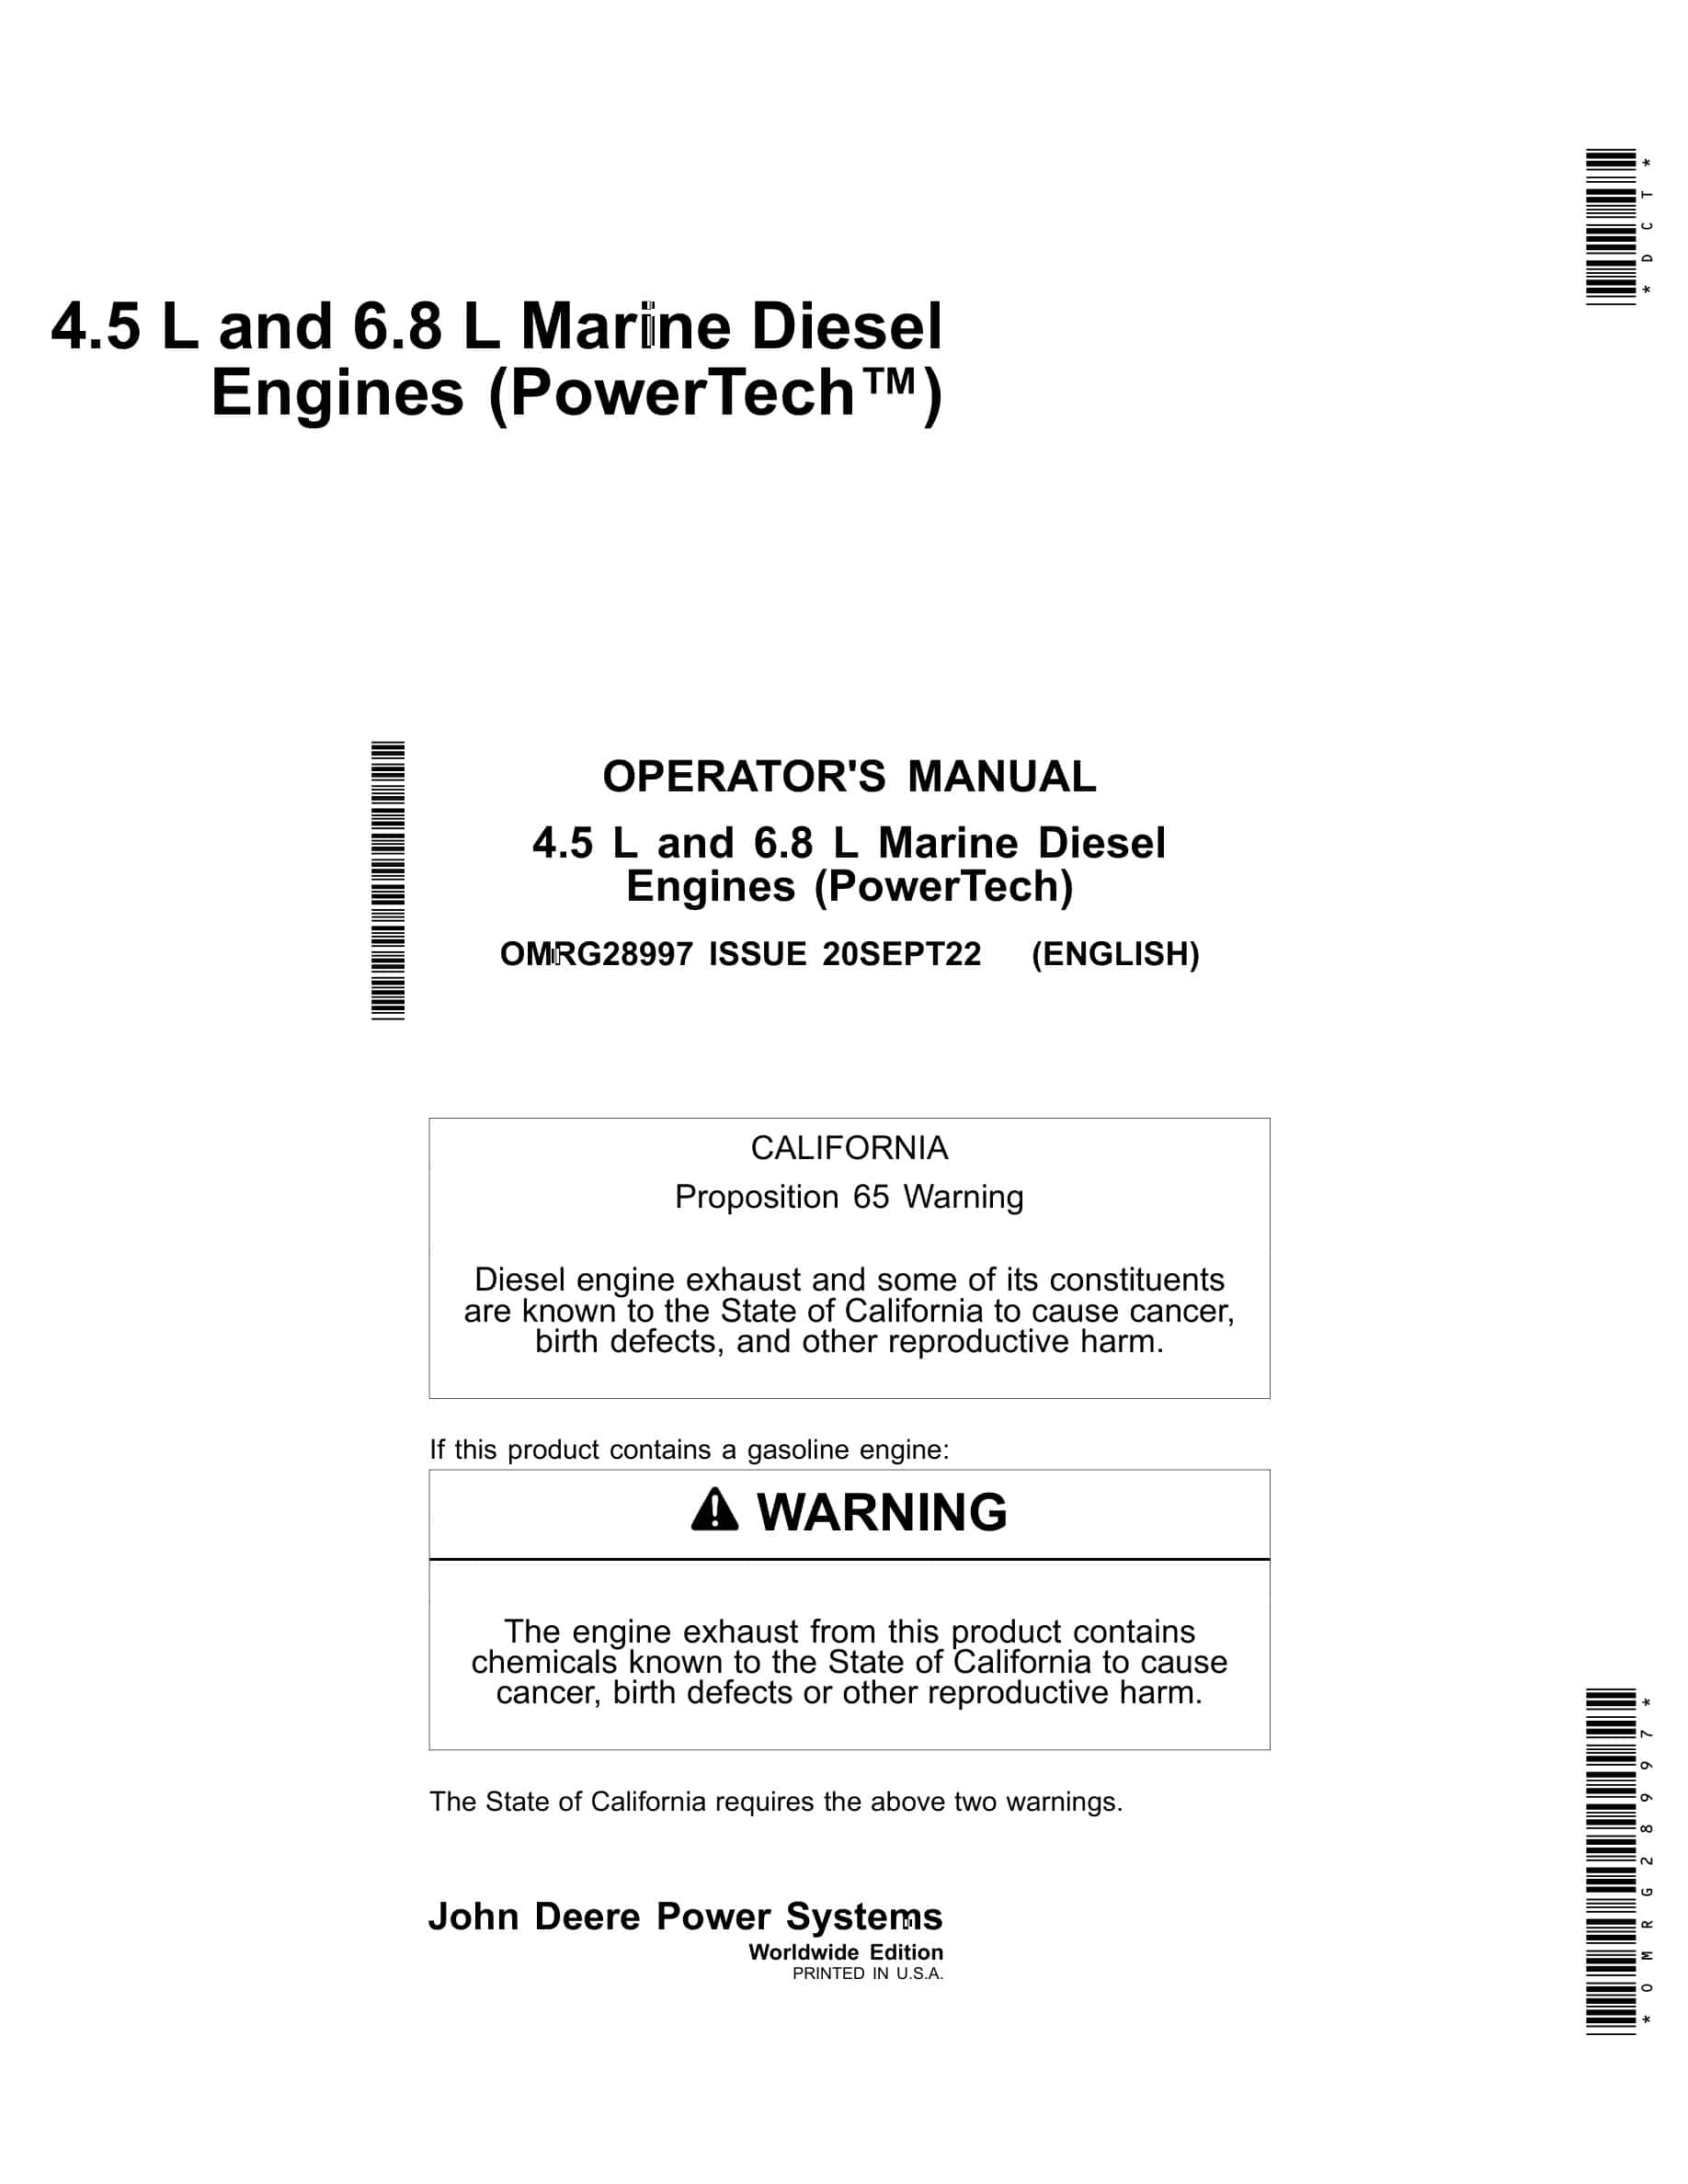 John Deere PowerTech 4.5 L and 6.8 L Marine Diesel Engines Operator Manual OMRG28997-1